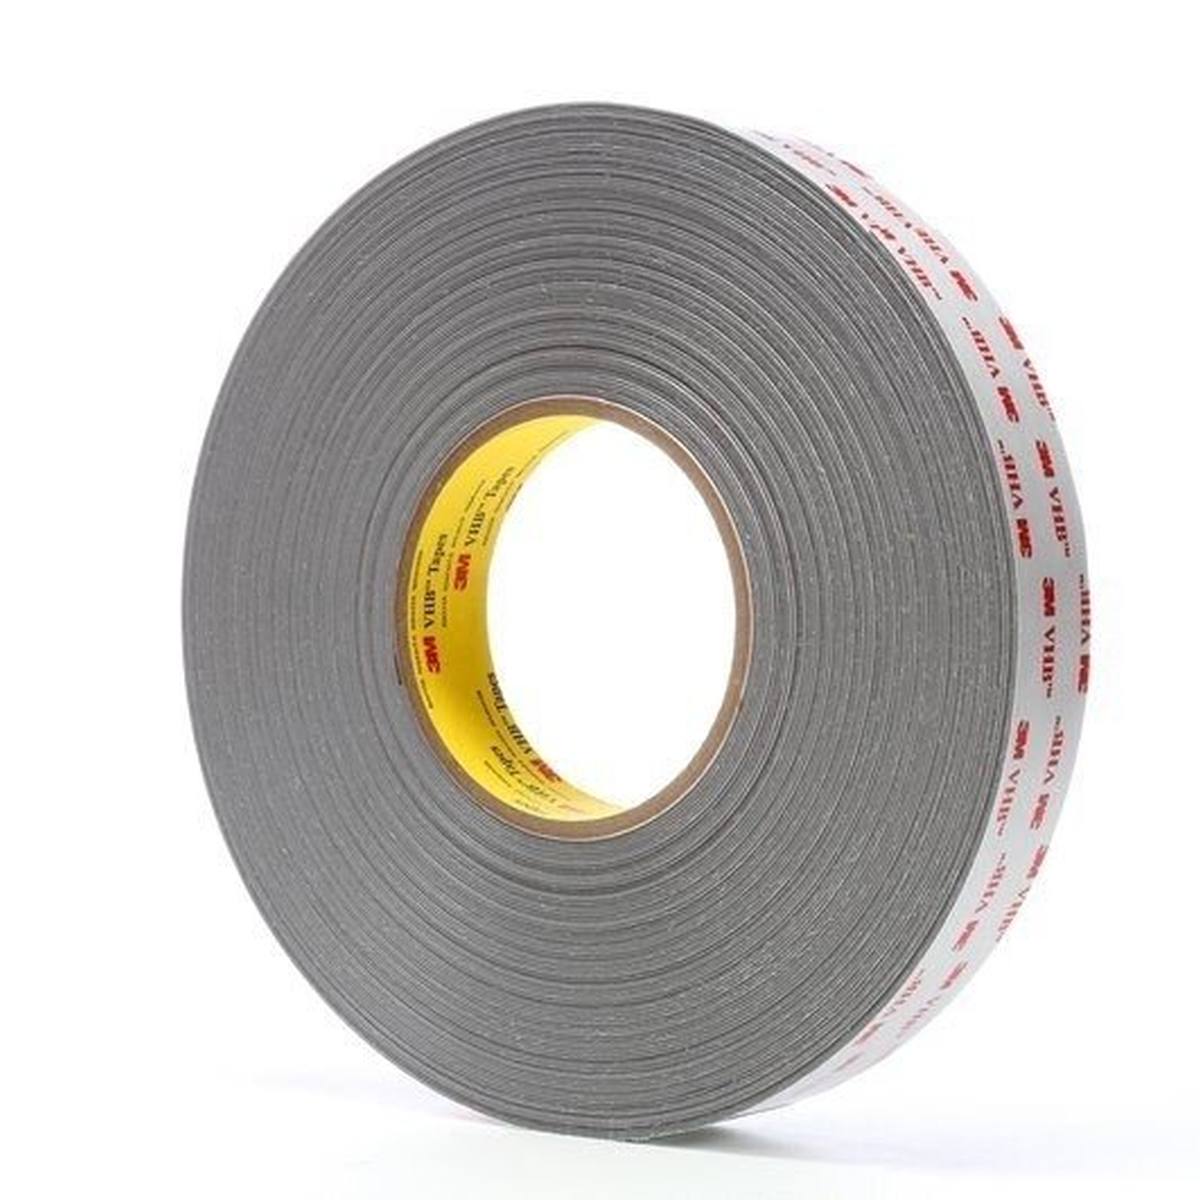 3M VHB adhesive tape RP 25P, gray, 6 mm x 66 m, 0.6 mm